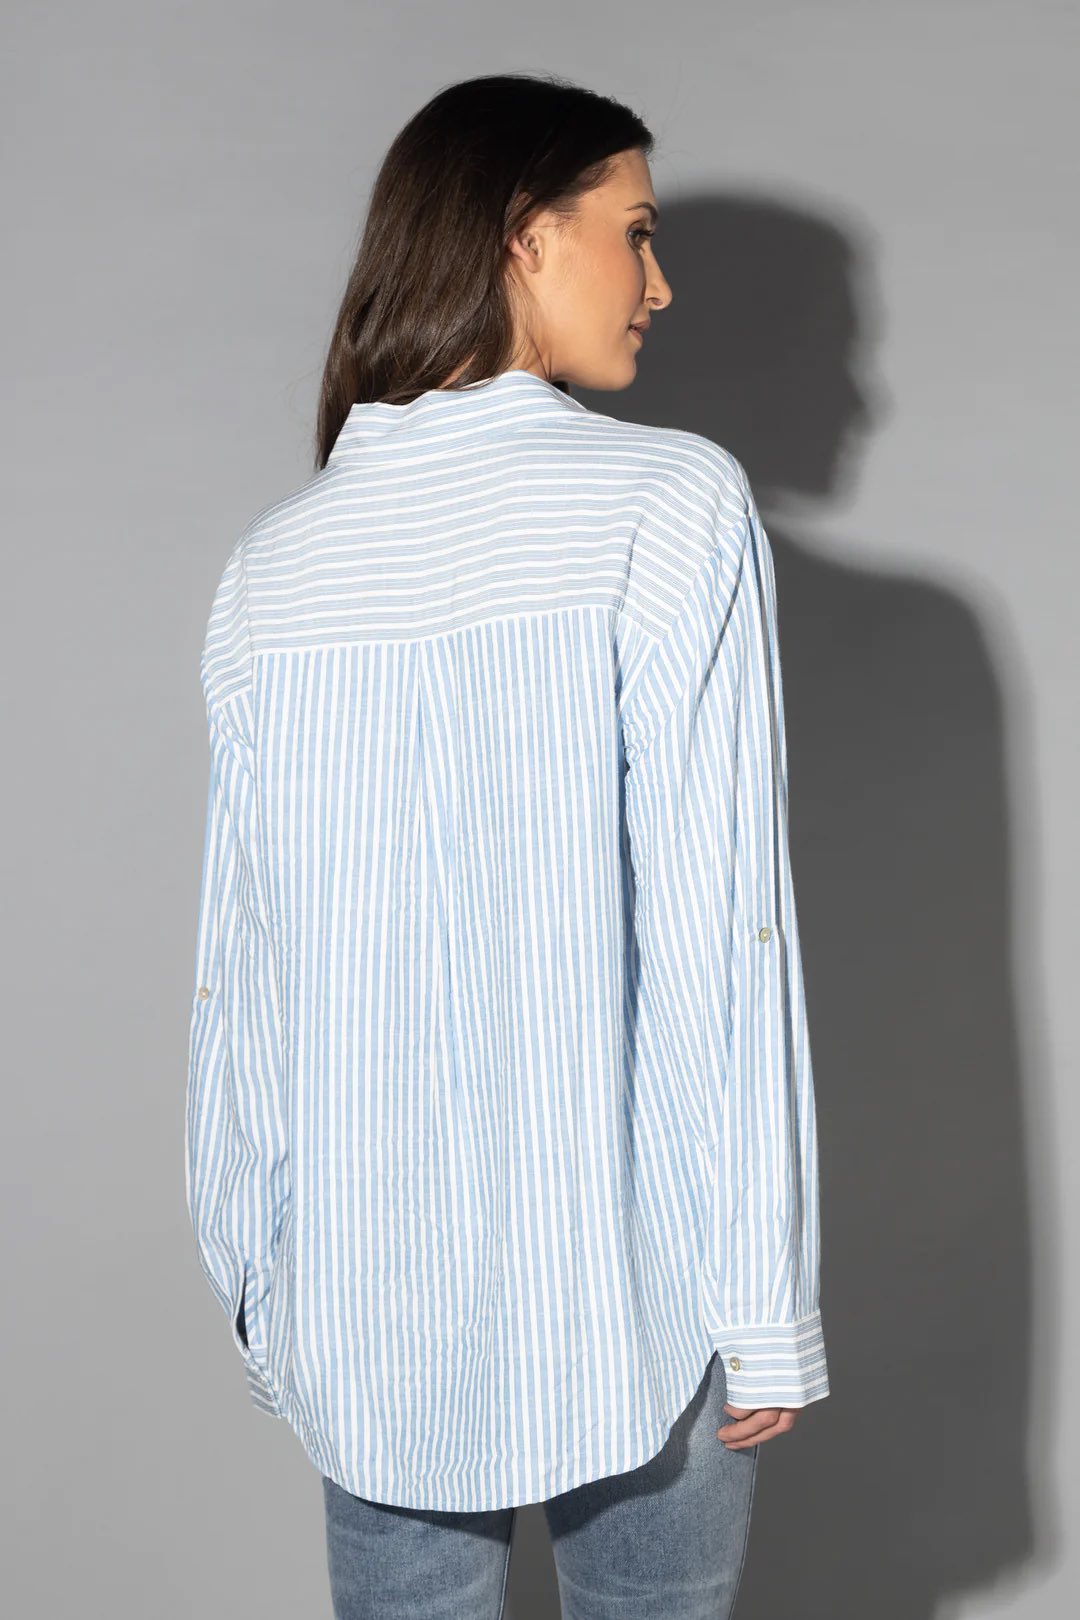 Hugo Shirt - Blue Stripe